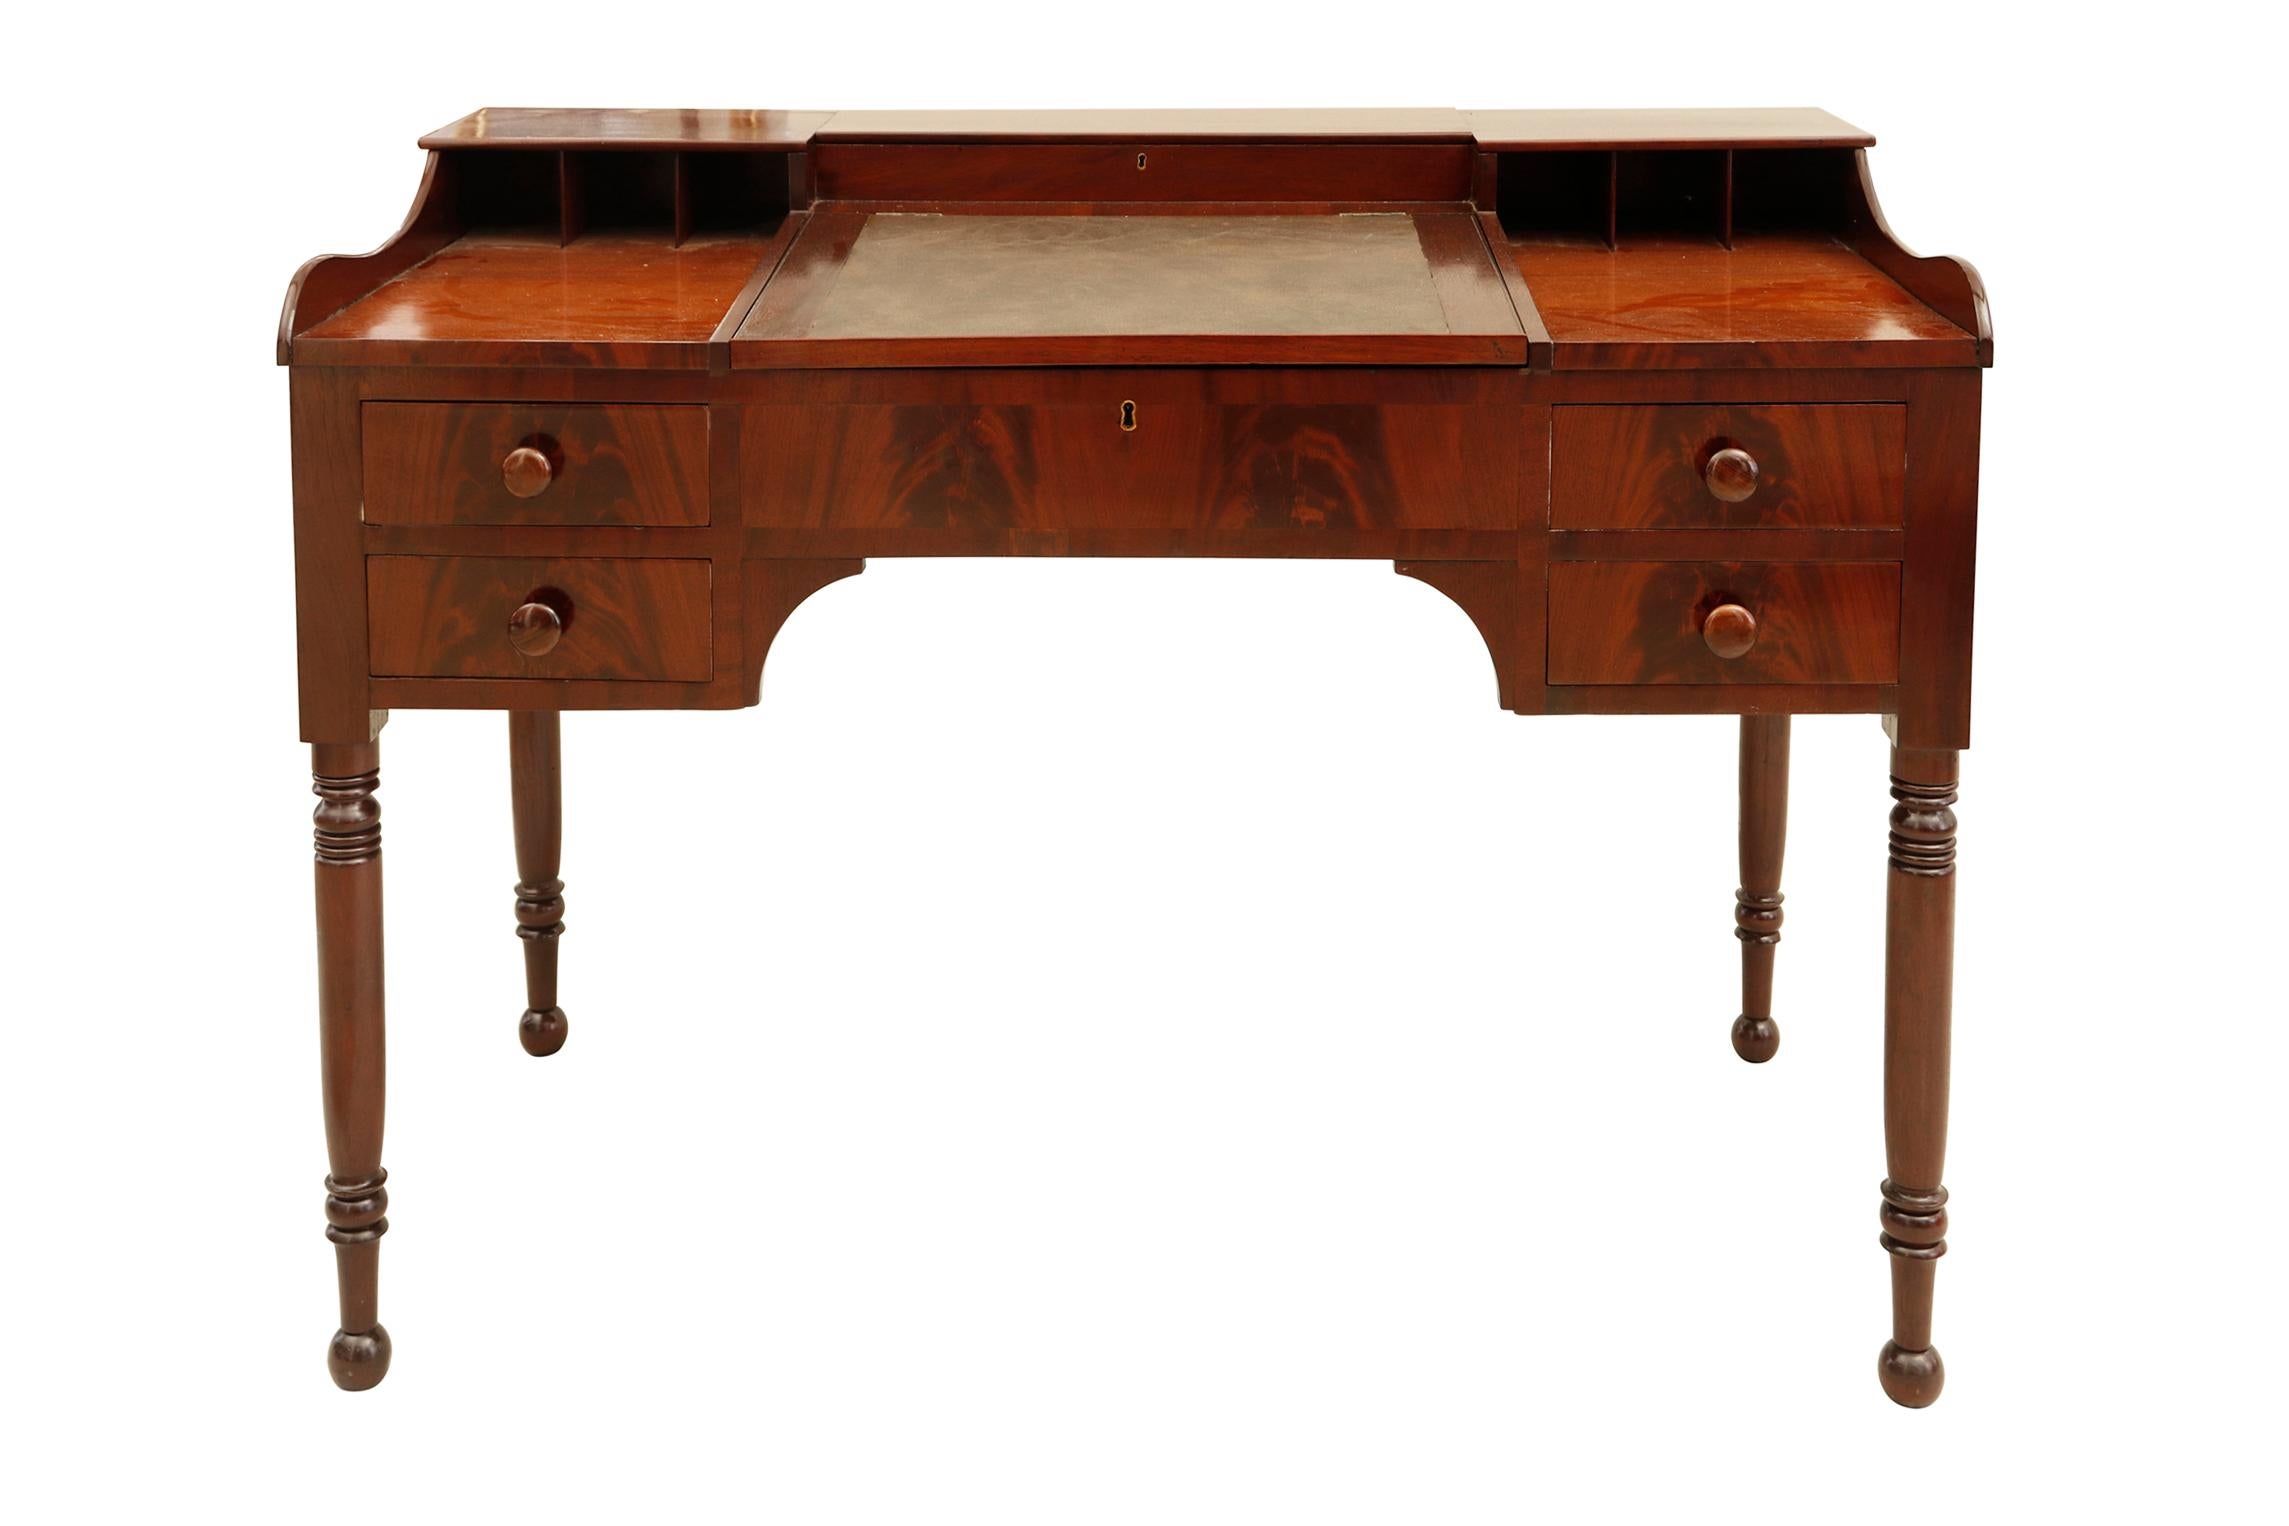 A beautiful Federal (1820-1830) writing desk.